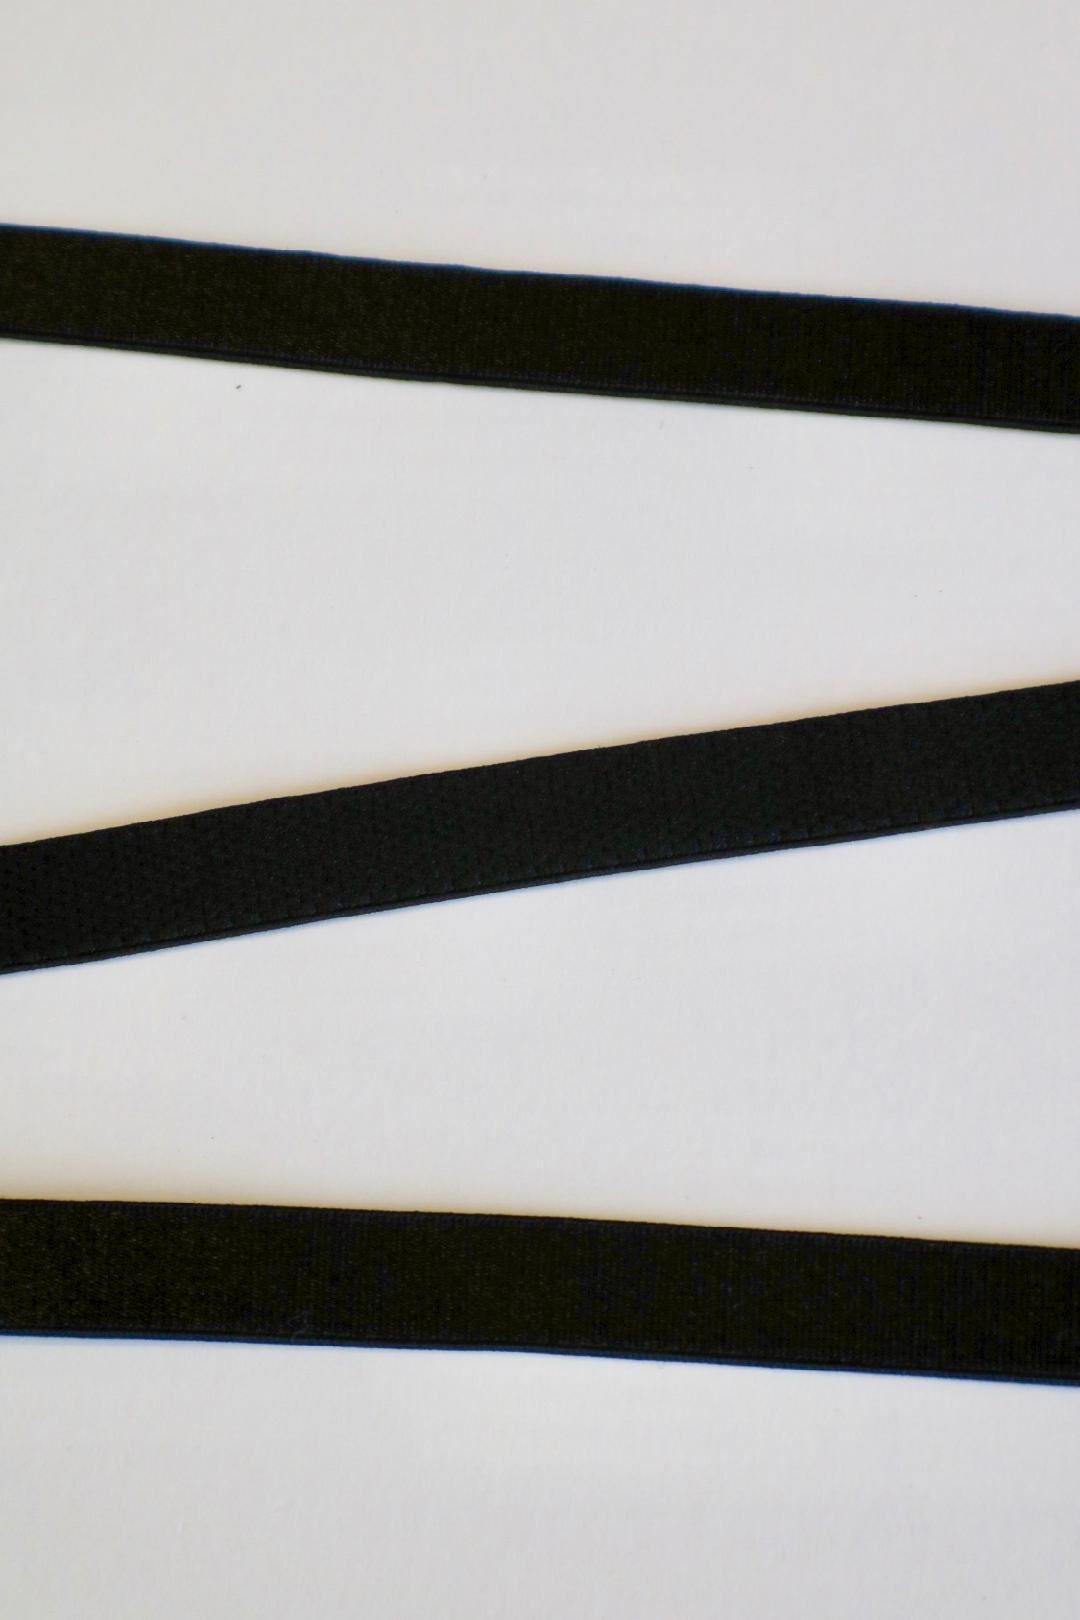 Premium Photo  Elastic black elastic band for sewing and needlework.